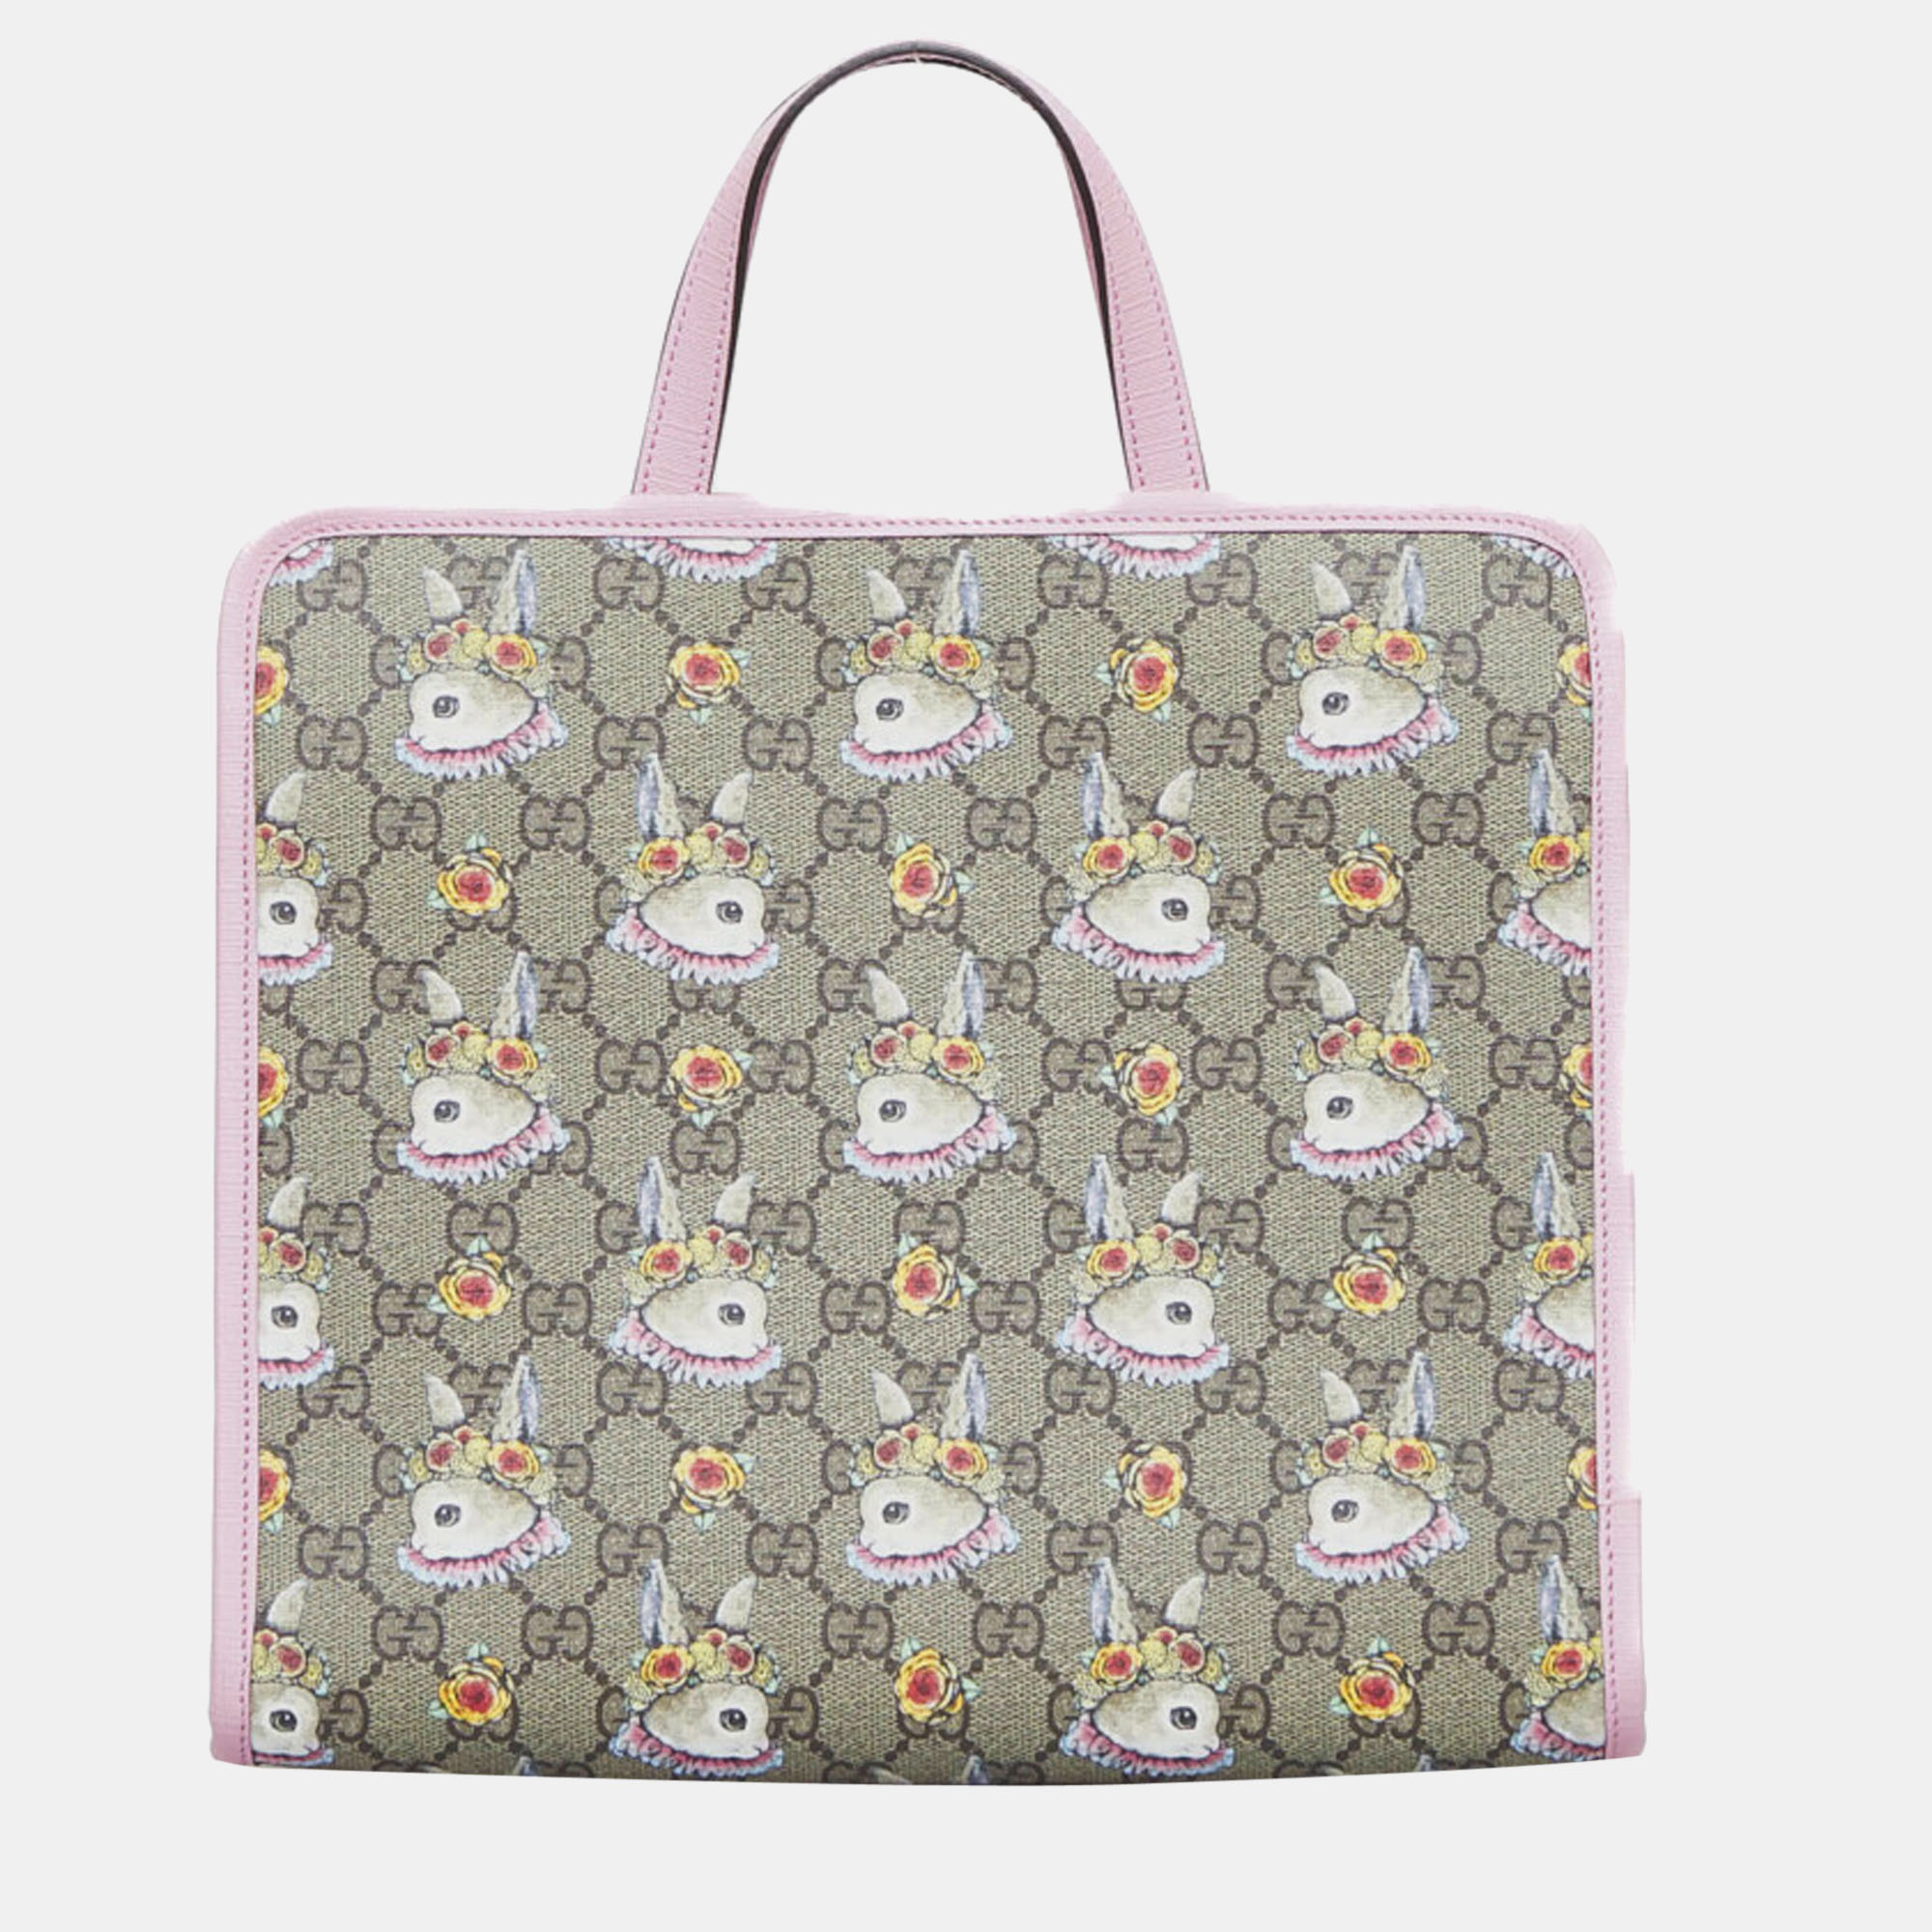 Gucci Brown Canvas GG Supreme Rabbit Handbag